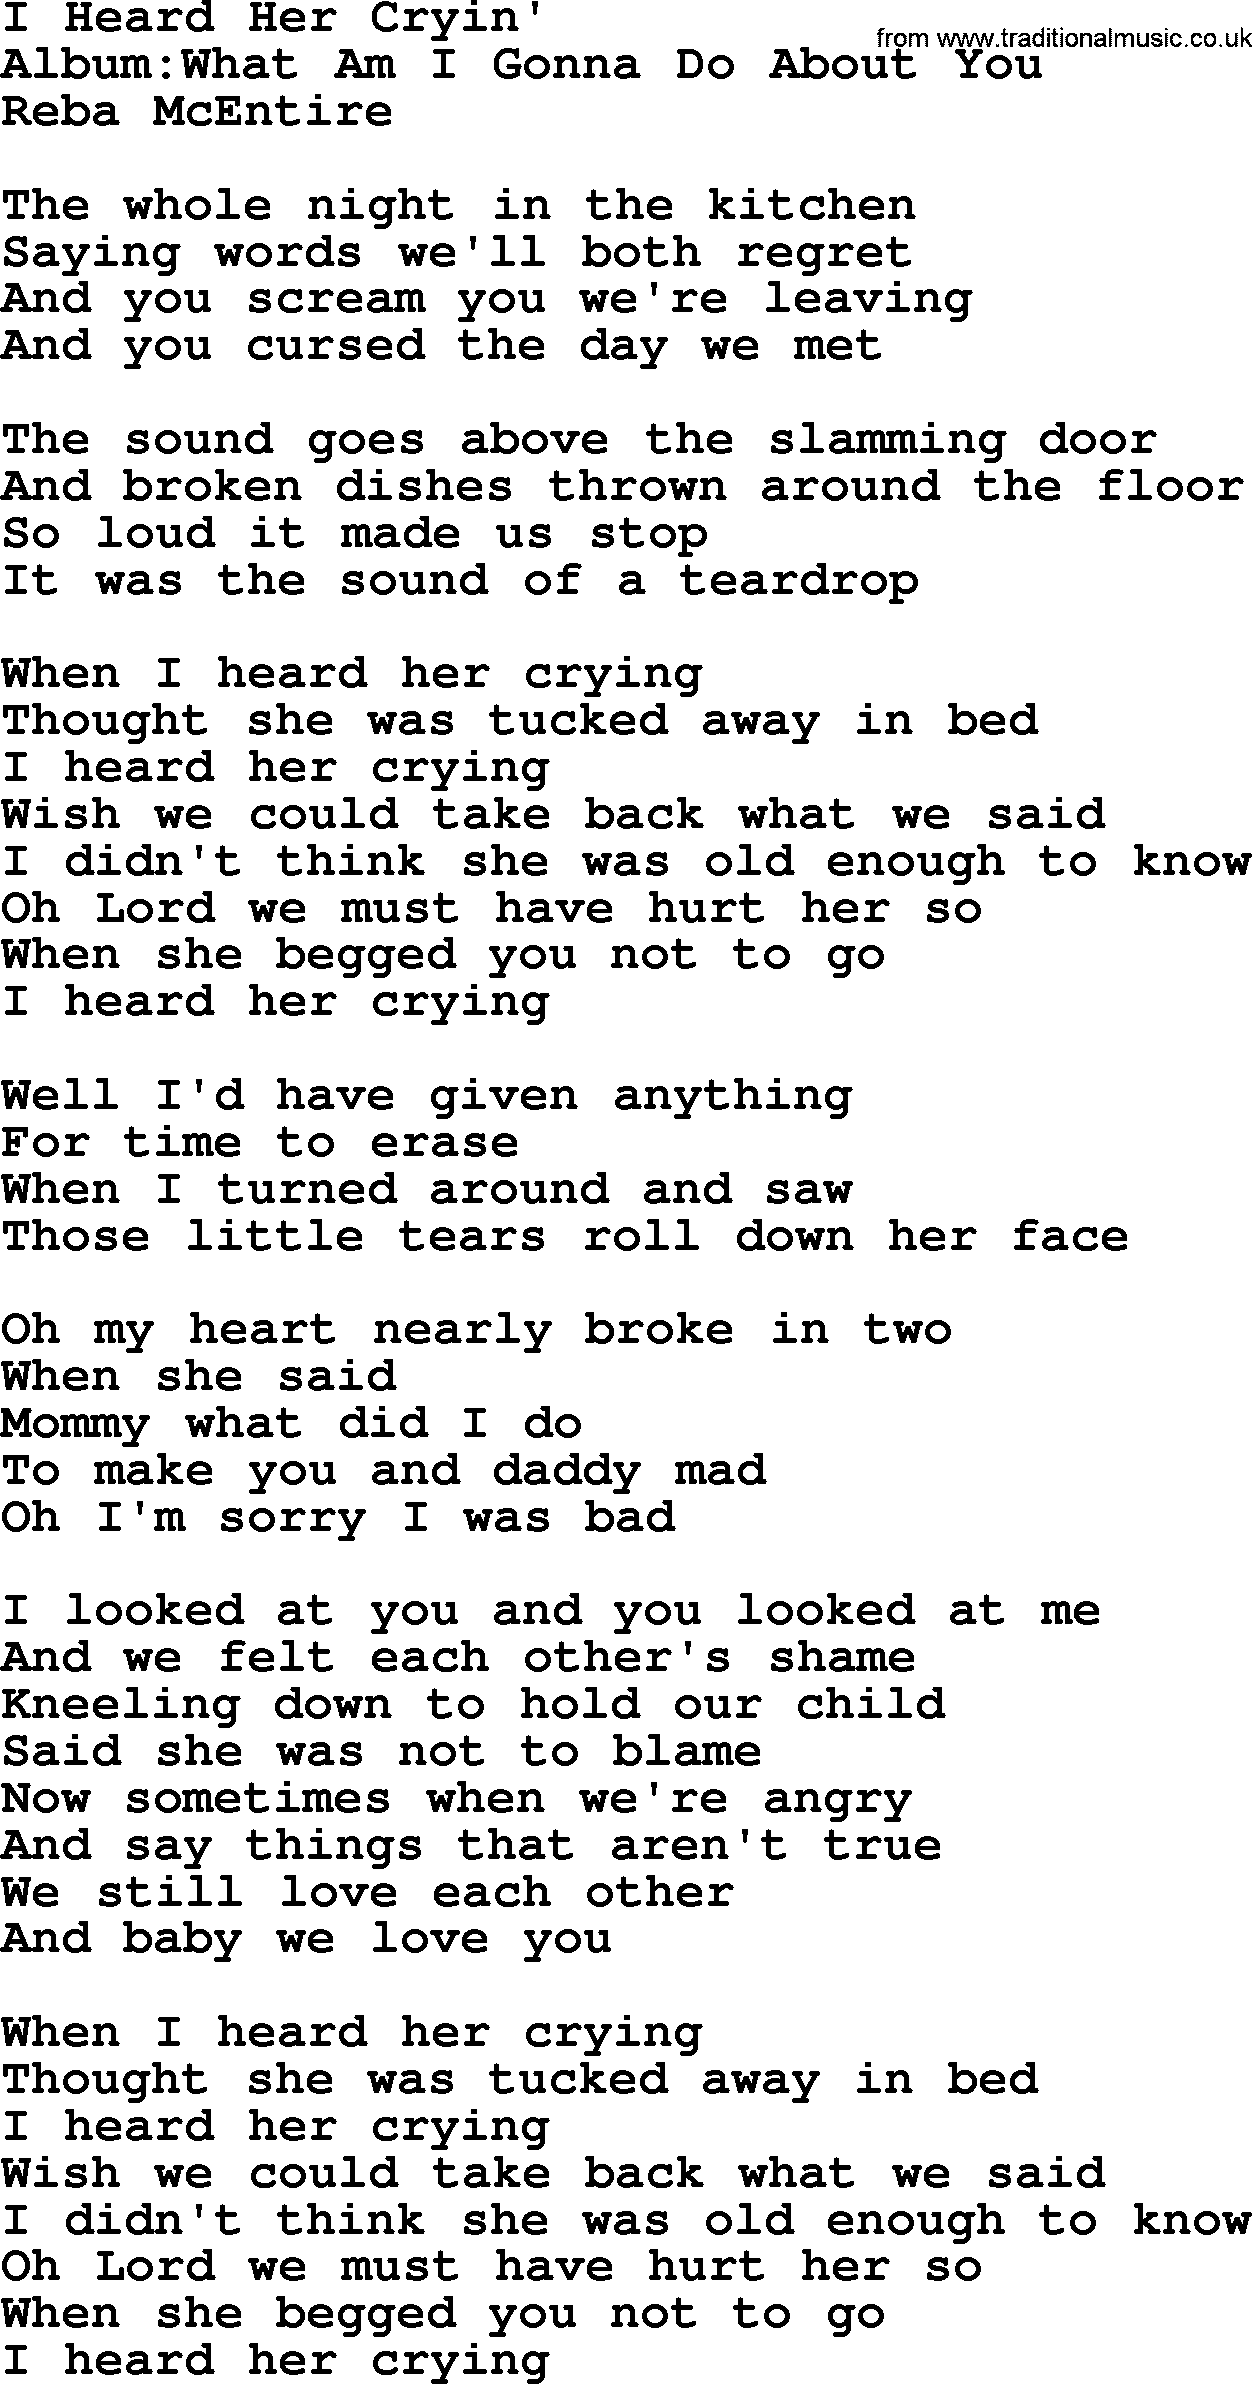 Reba McEntire song: I Heard Her Cryin' lyrics